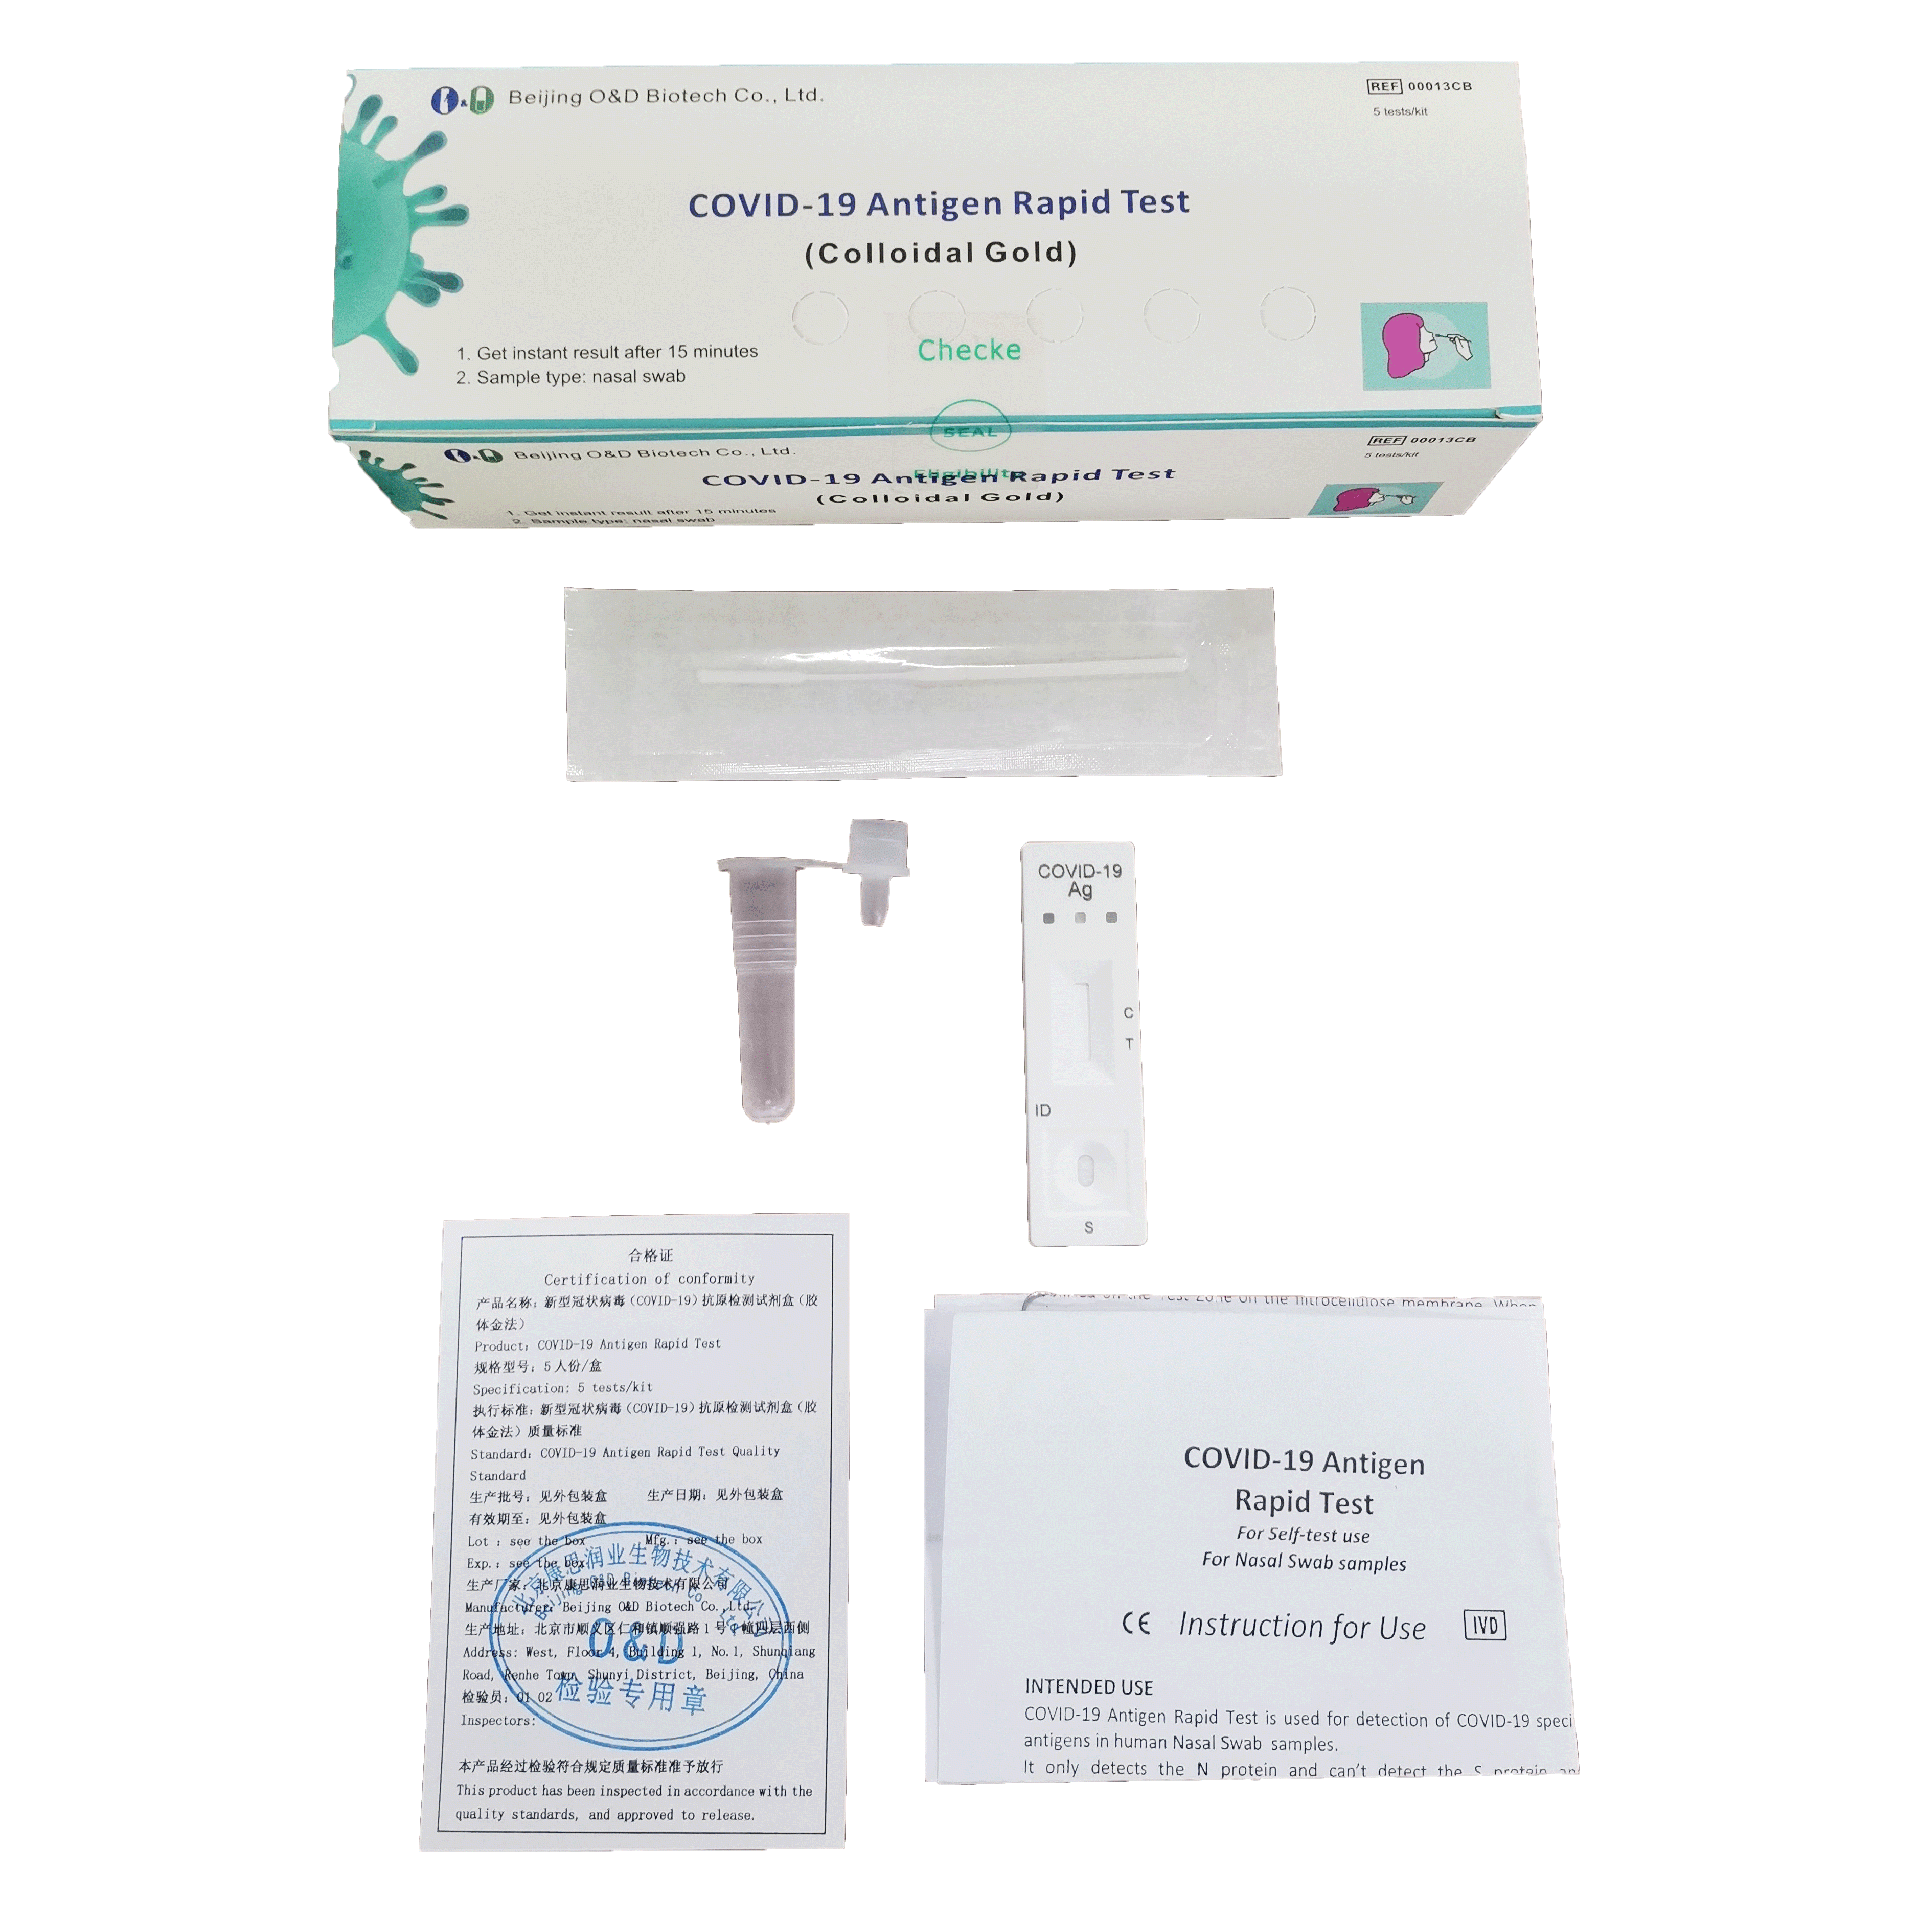 COVID-19 Antigen Rapid Test for Self Use (Nasal Swab Sample)